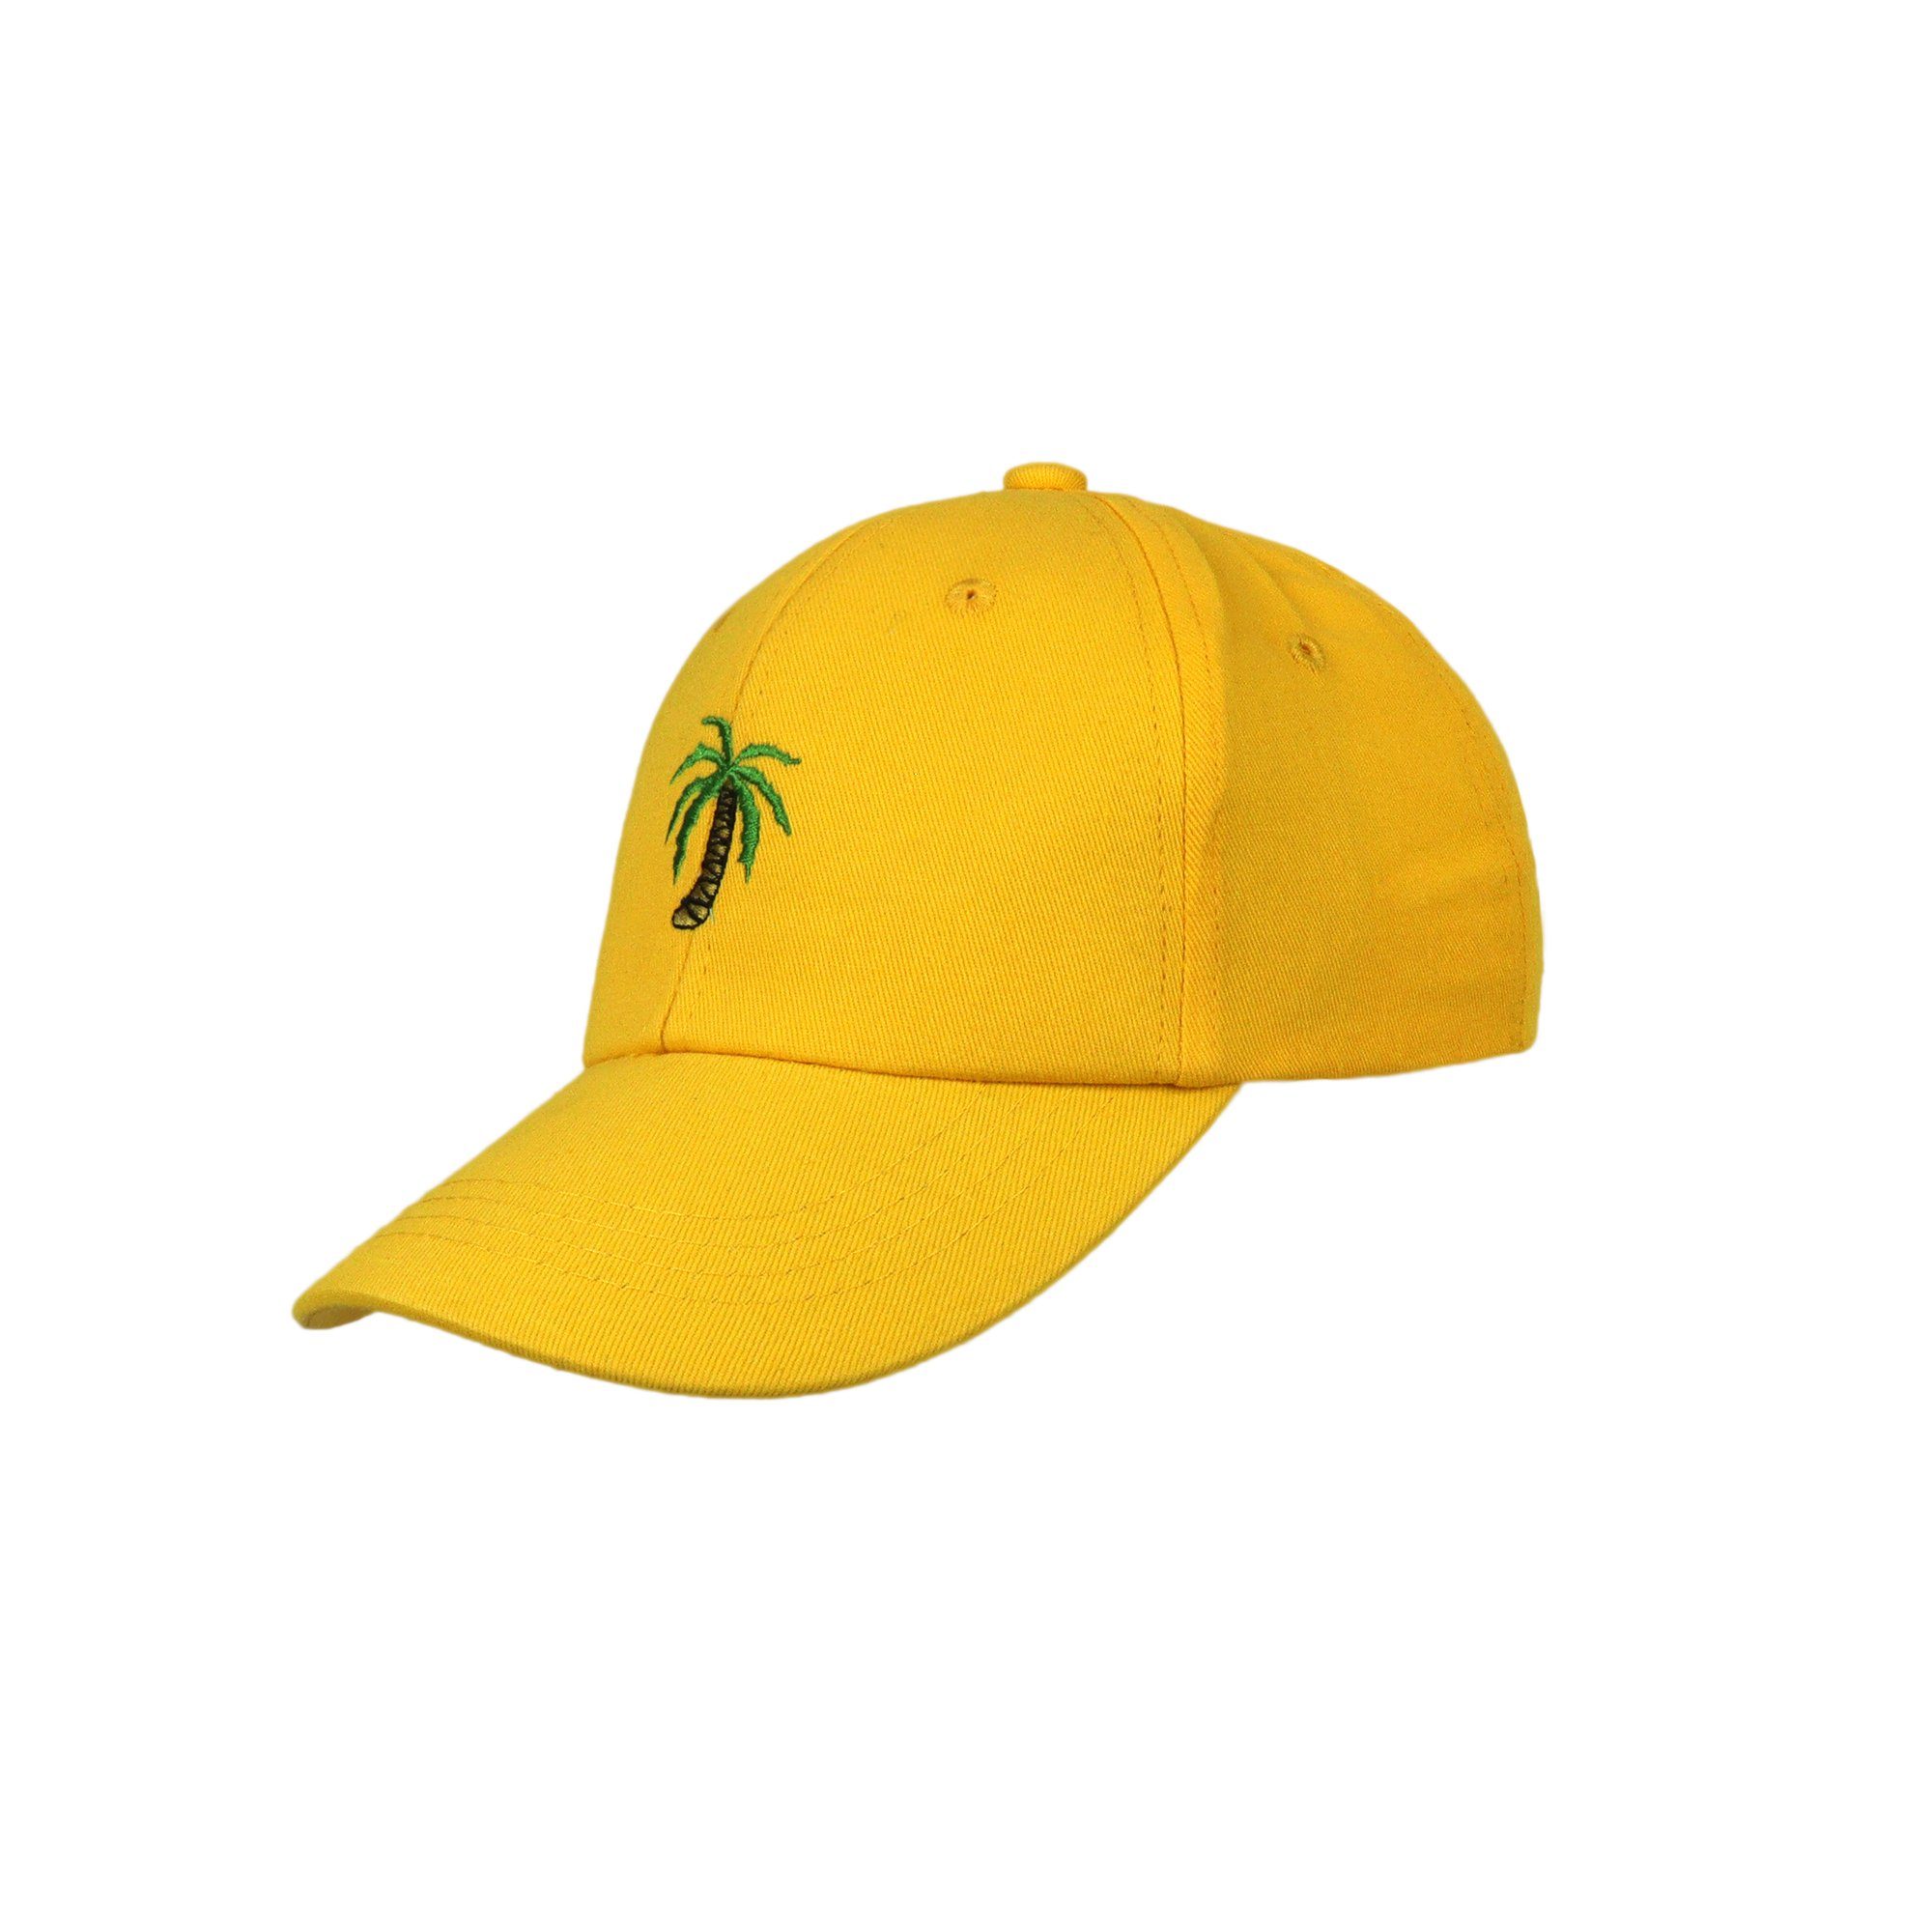 ZEBRO Baseball Cap Kinder Cap mit Belüftungslöcher gelb